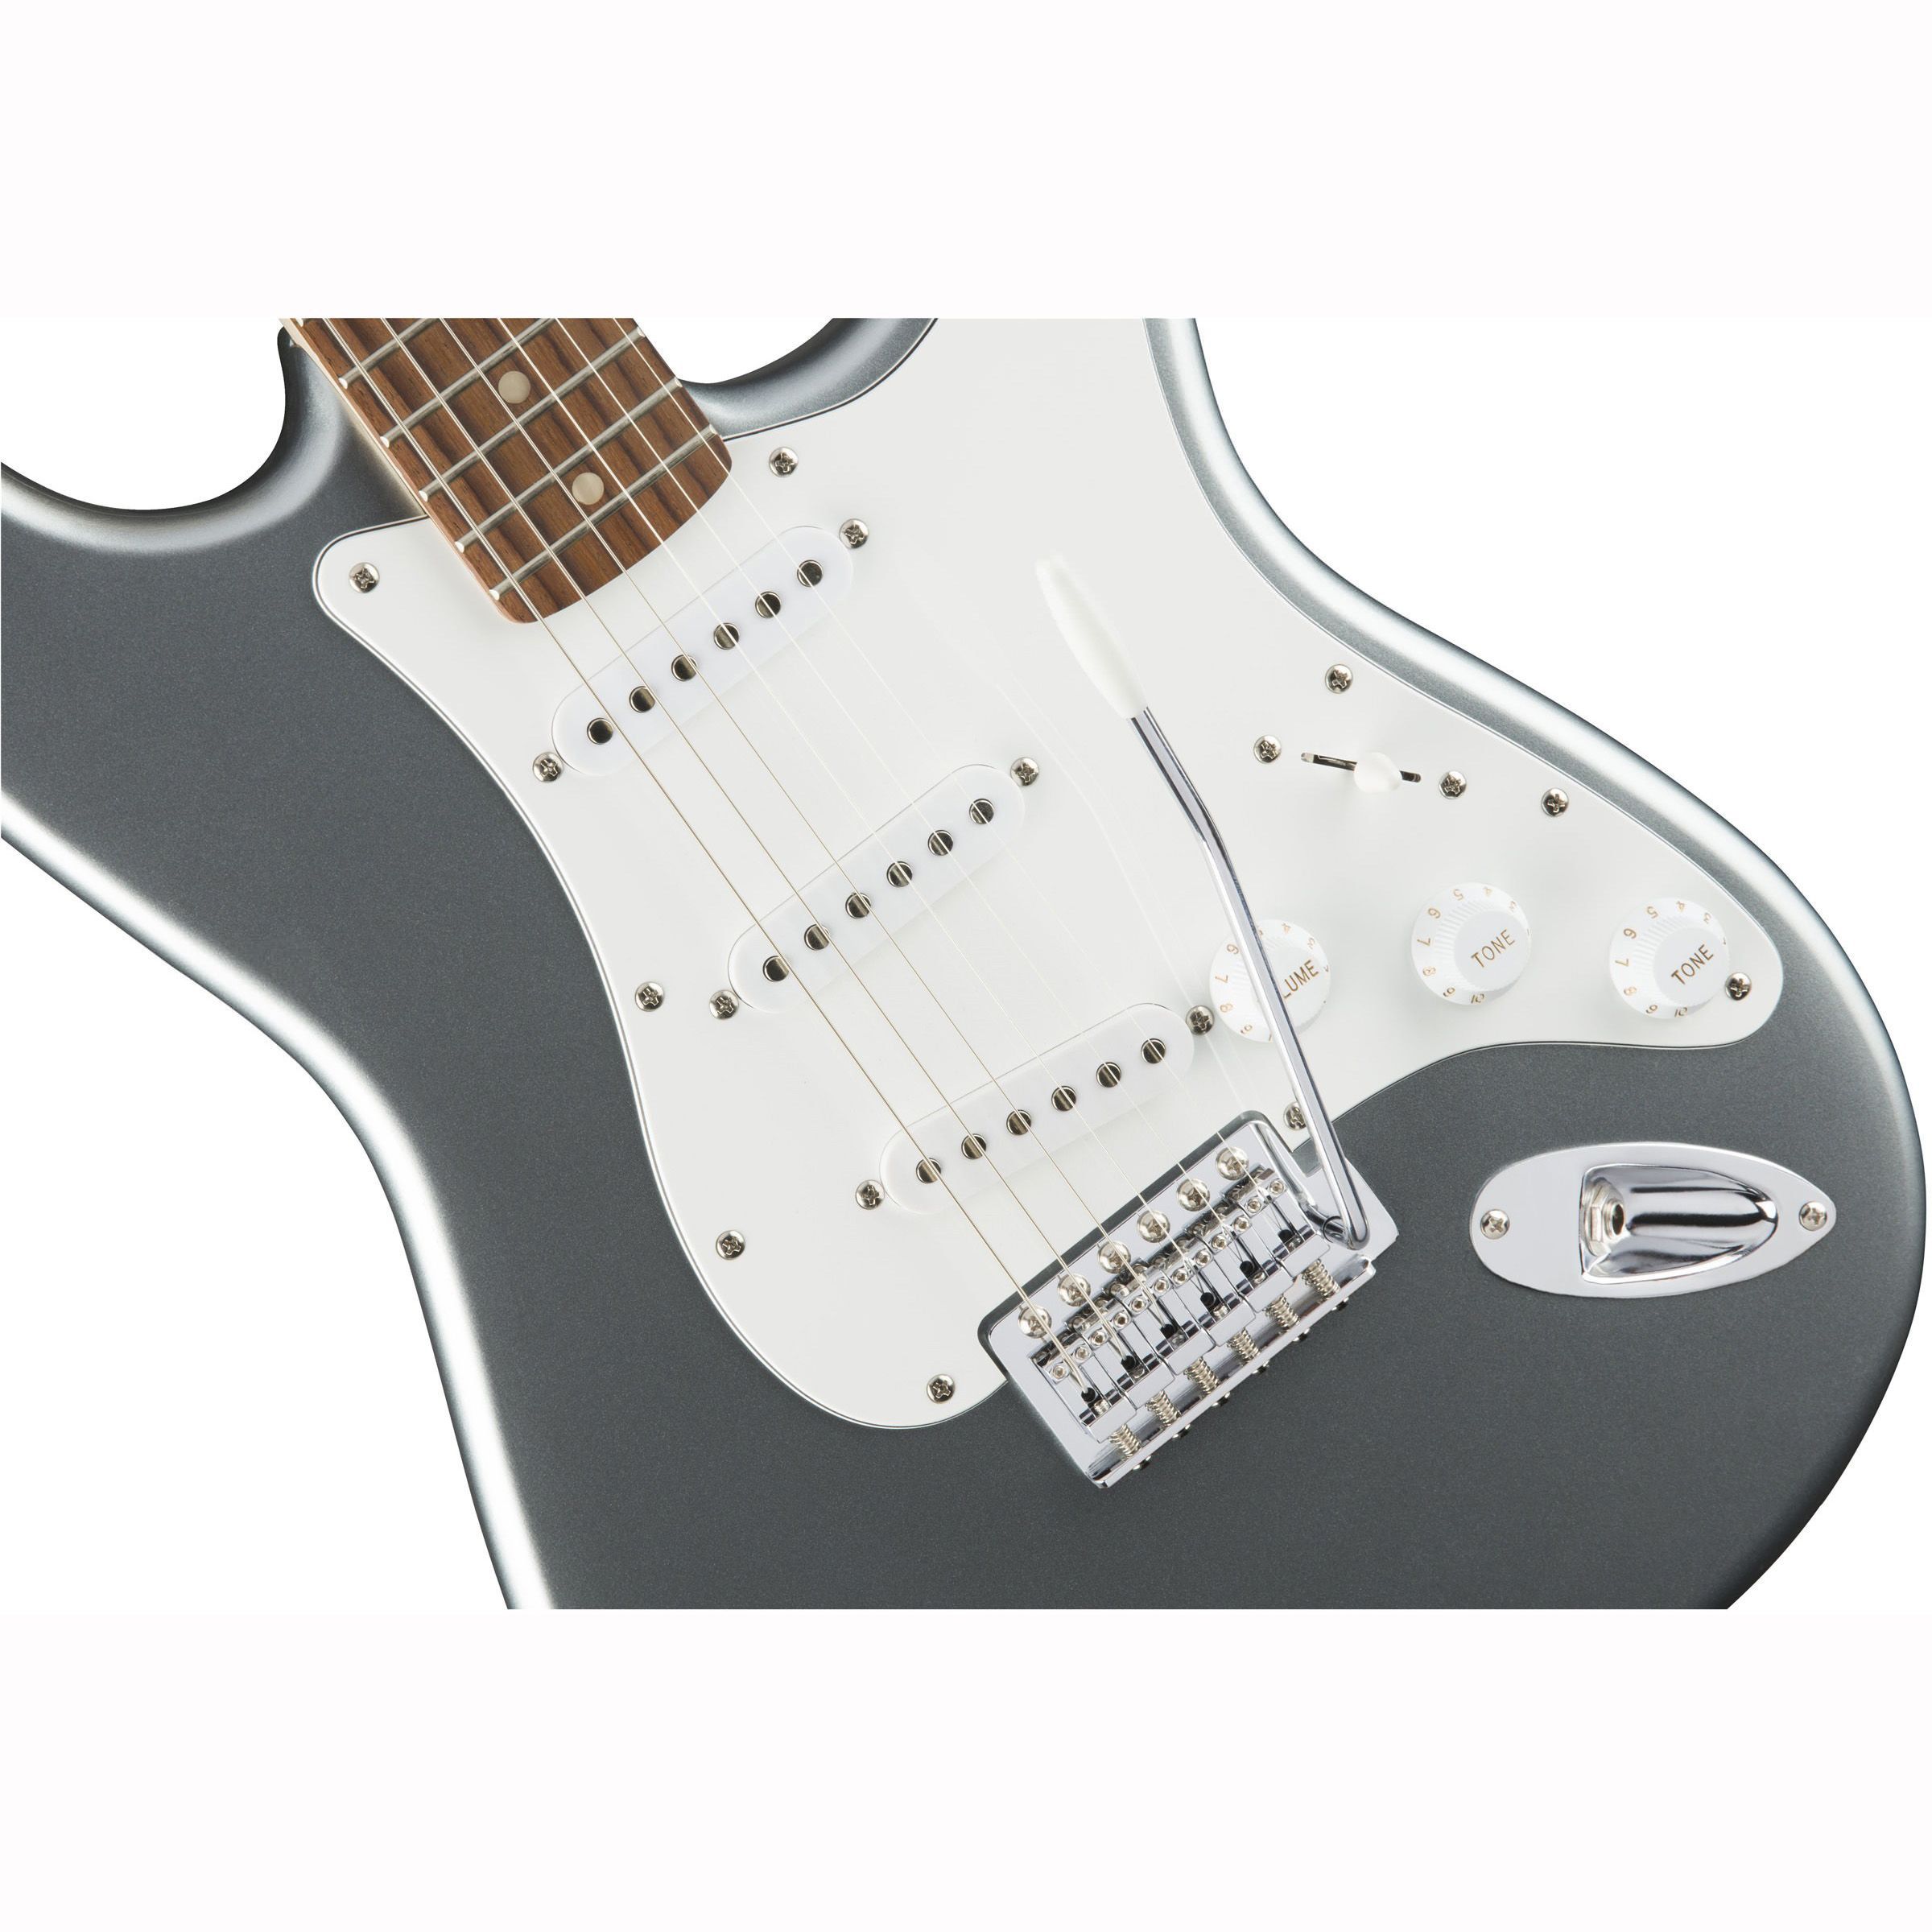 Squier stratocaster hss. Электрогитара Squier Affinity Stratocaster HSS. Гитара Fender Squier Stratocaster Affinity. Электрогитара Fender Squier Affinity. Электрогитара Fender Squier Stratocaster.